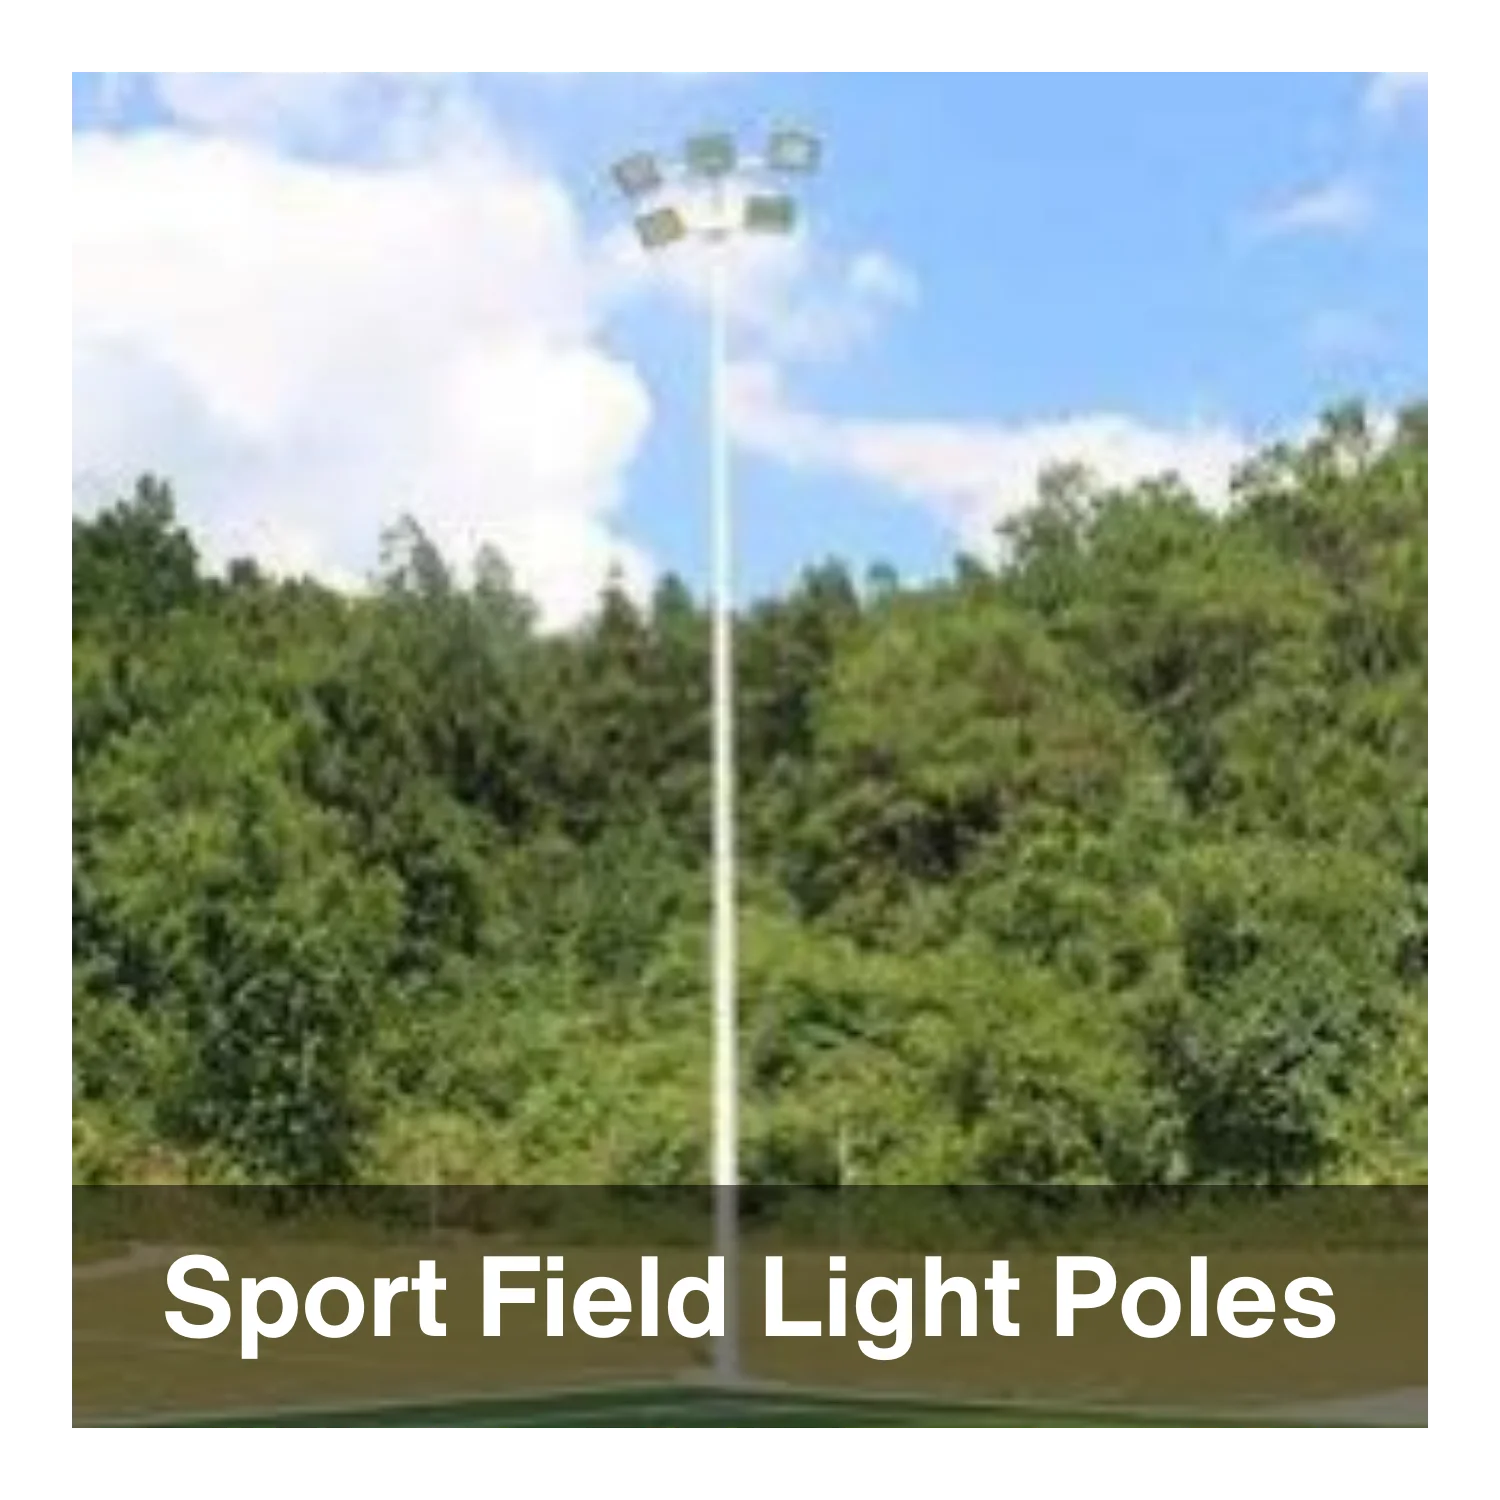 Sport Field Light Poles example